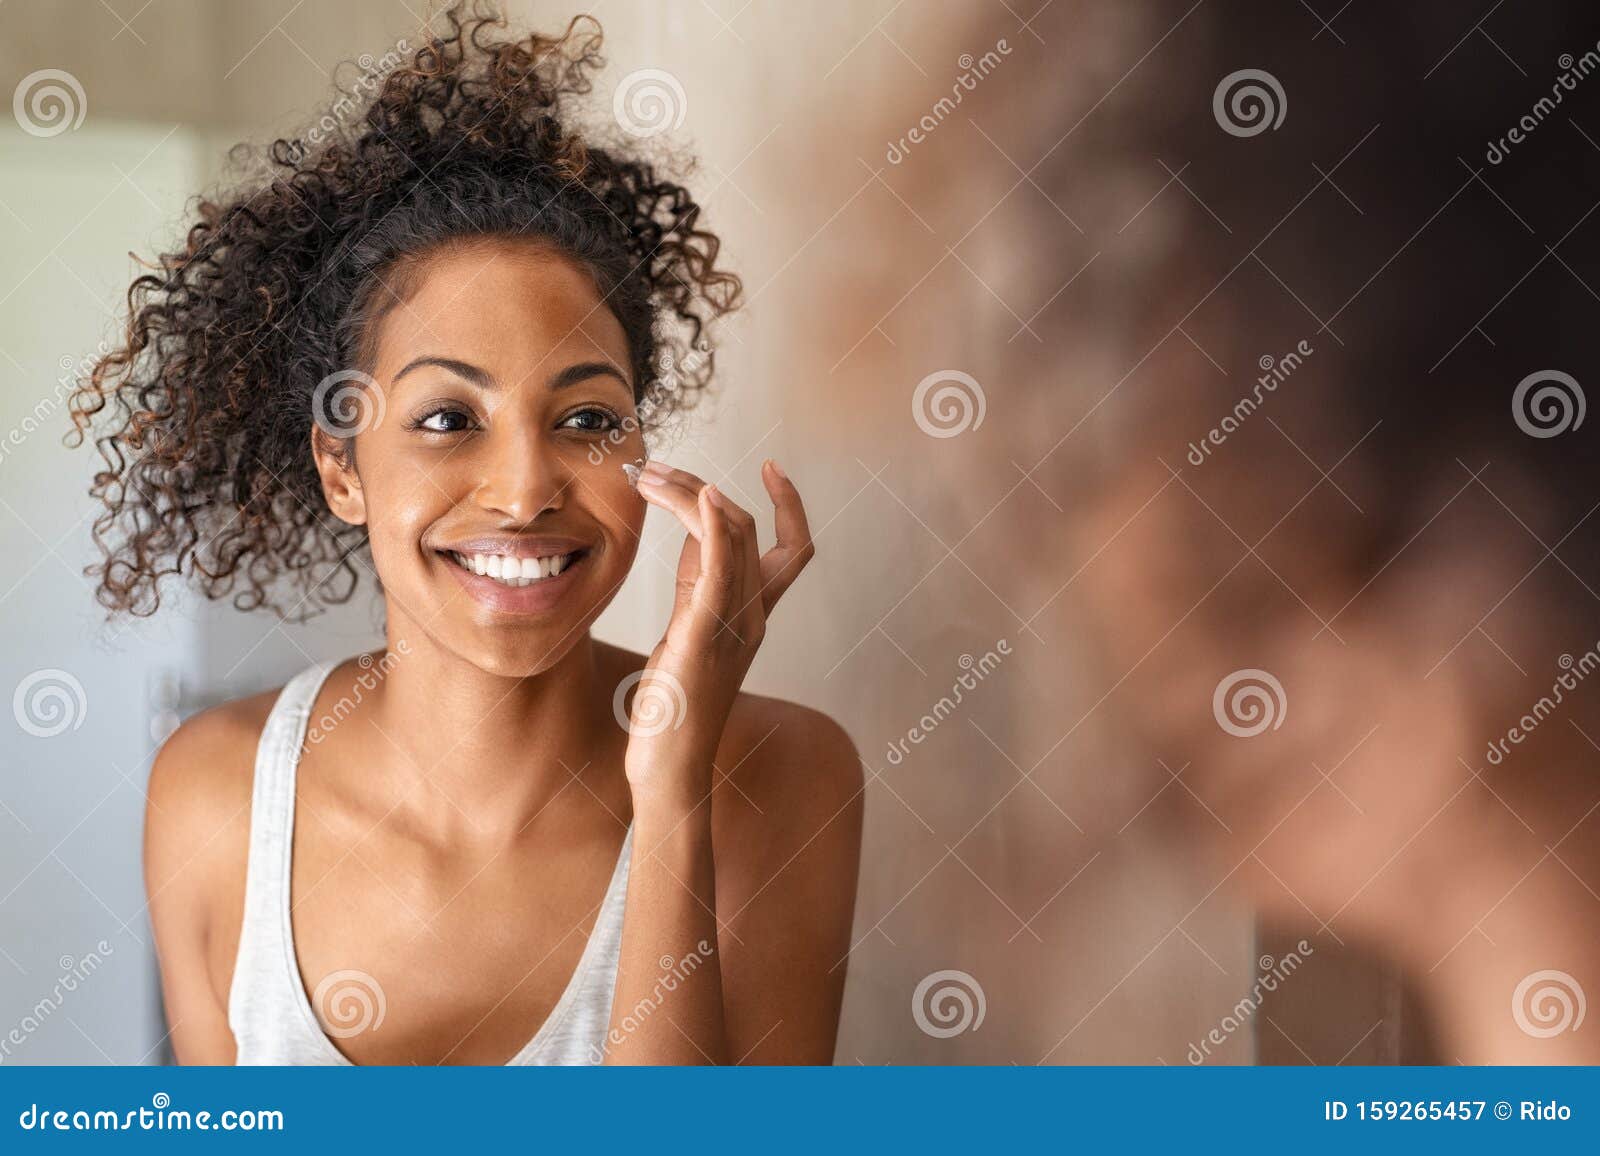 young black woman applying skin cream